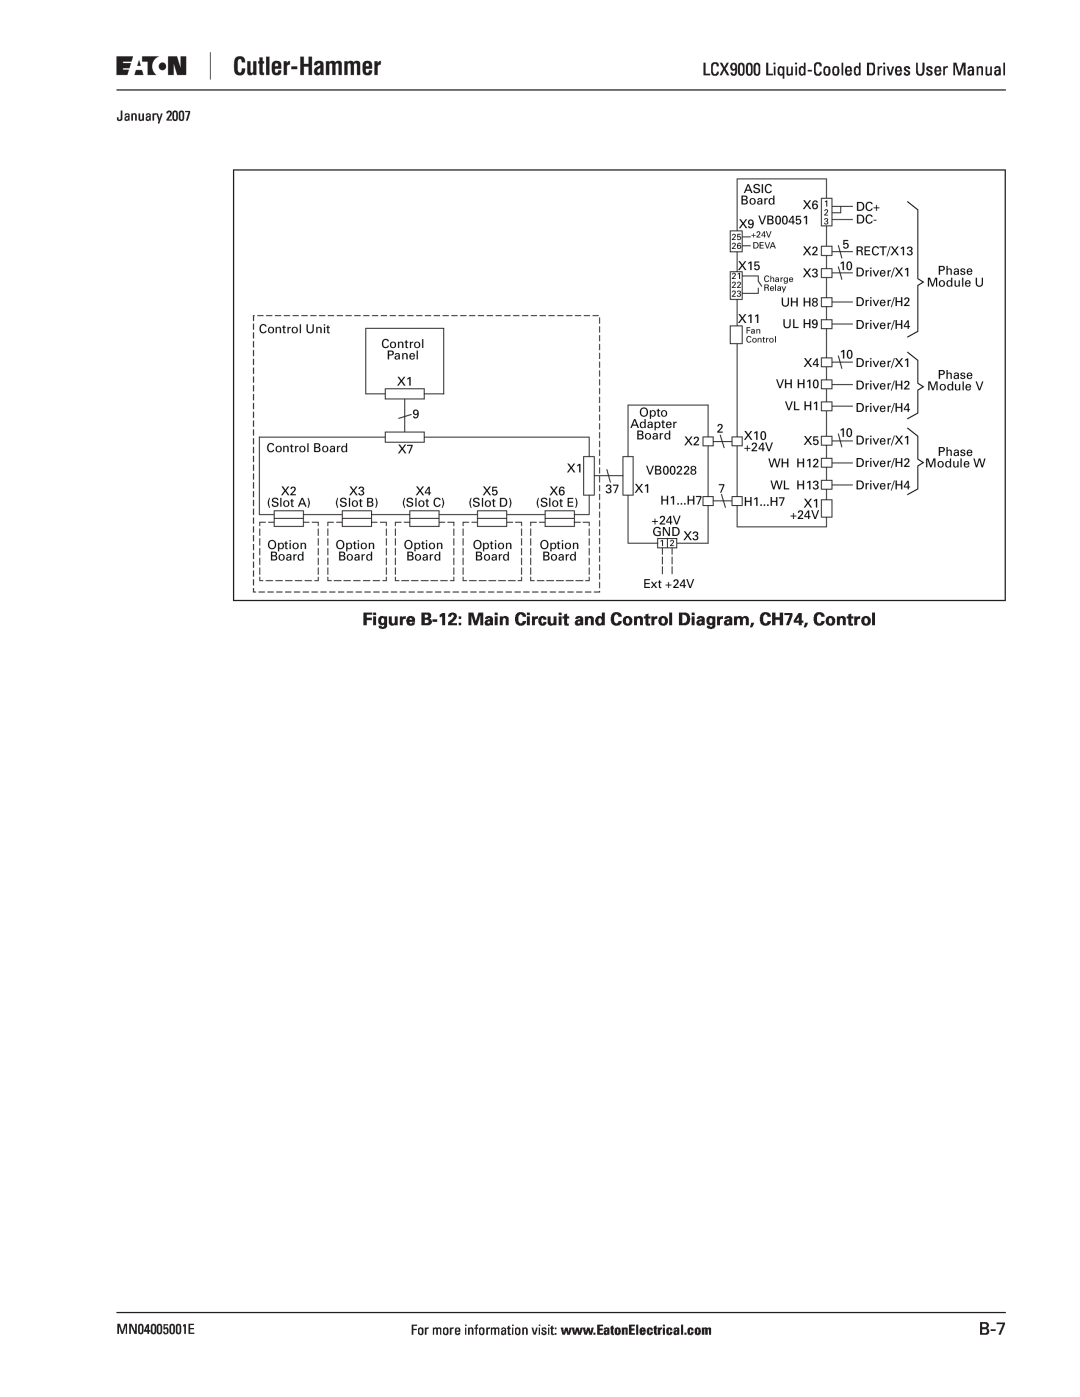 J. T. Eaton Figure B-12 Main Circuit and Control Diagram, CH74, Control, LCX9000 Liquid-Cooled Drives User Manual 